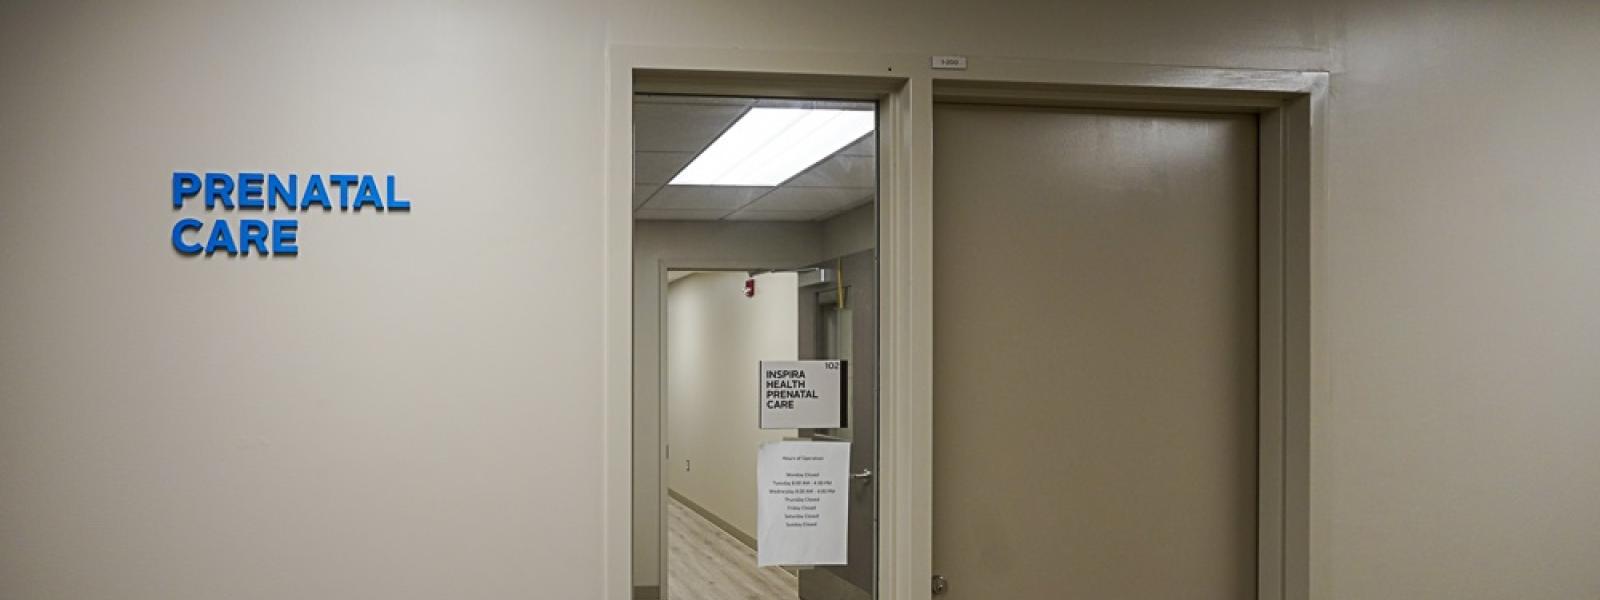 Clinic entrance that reads "Prenatal Care"